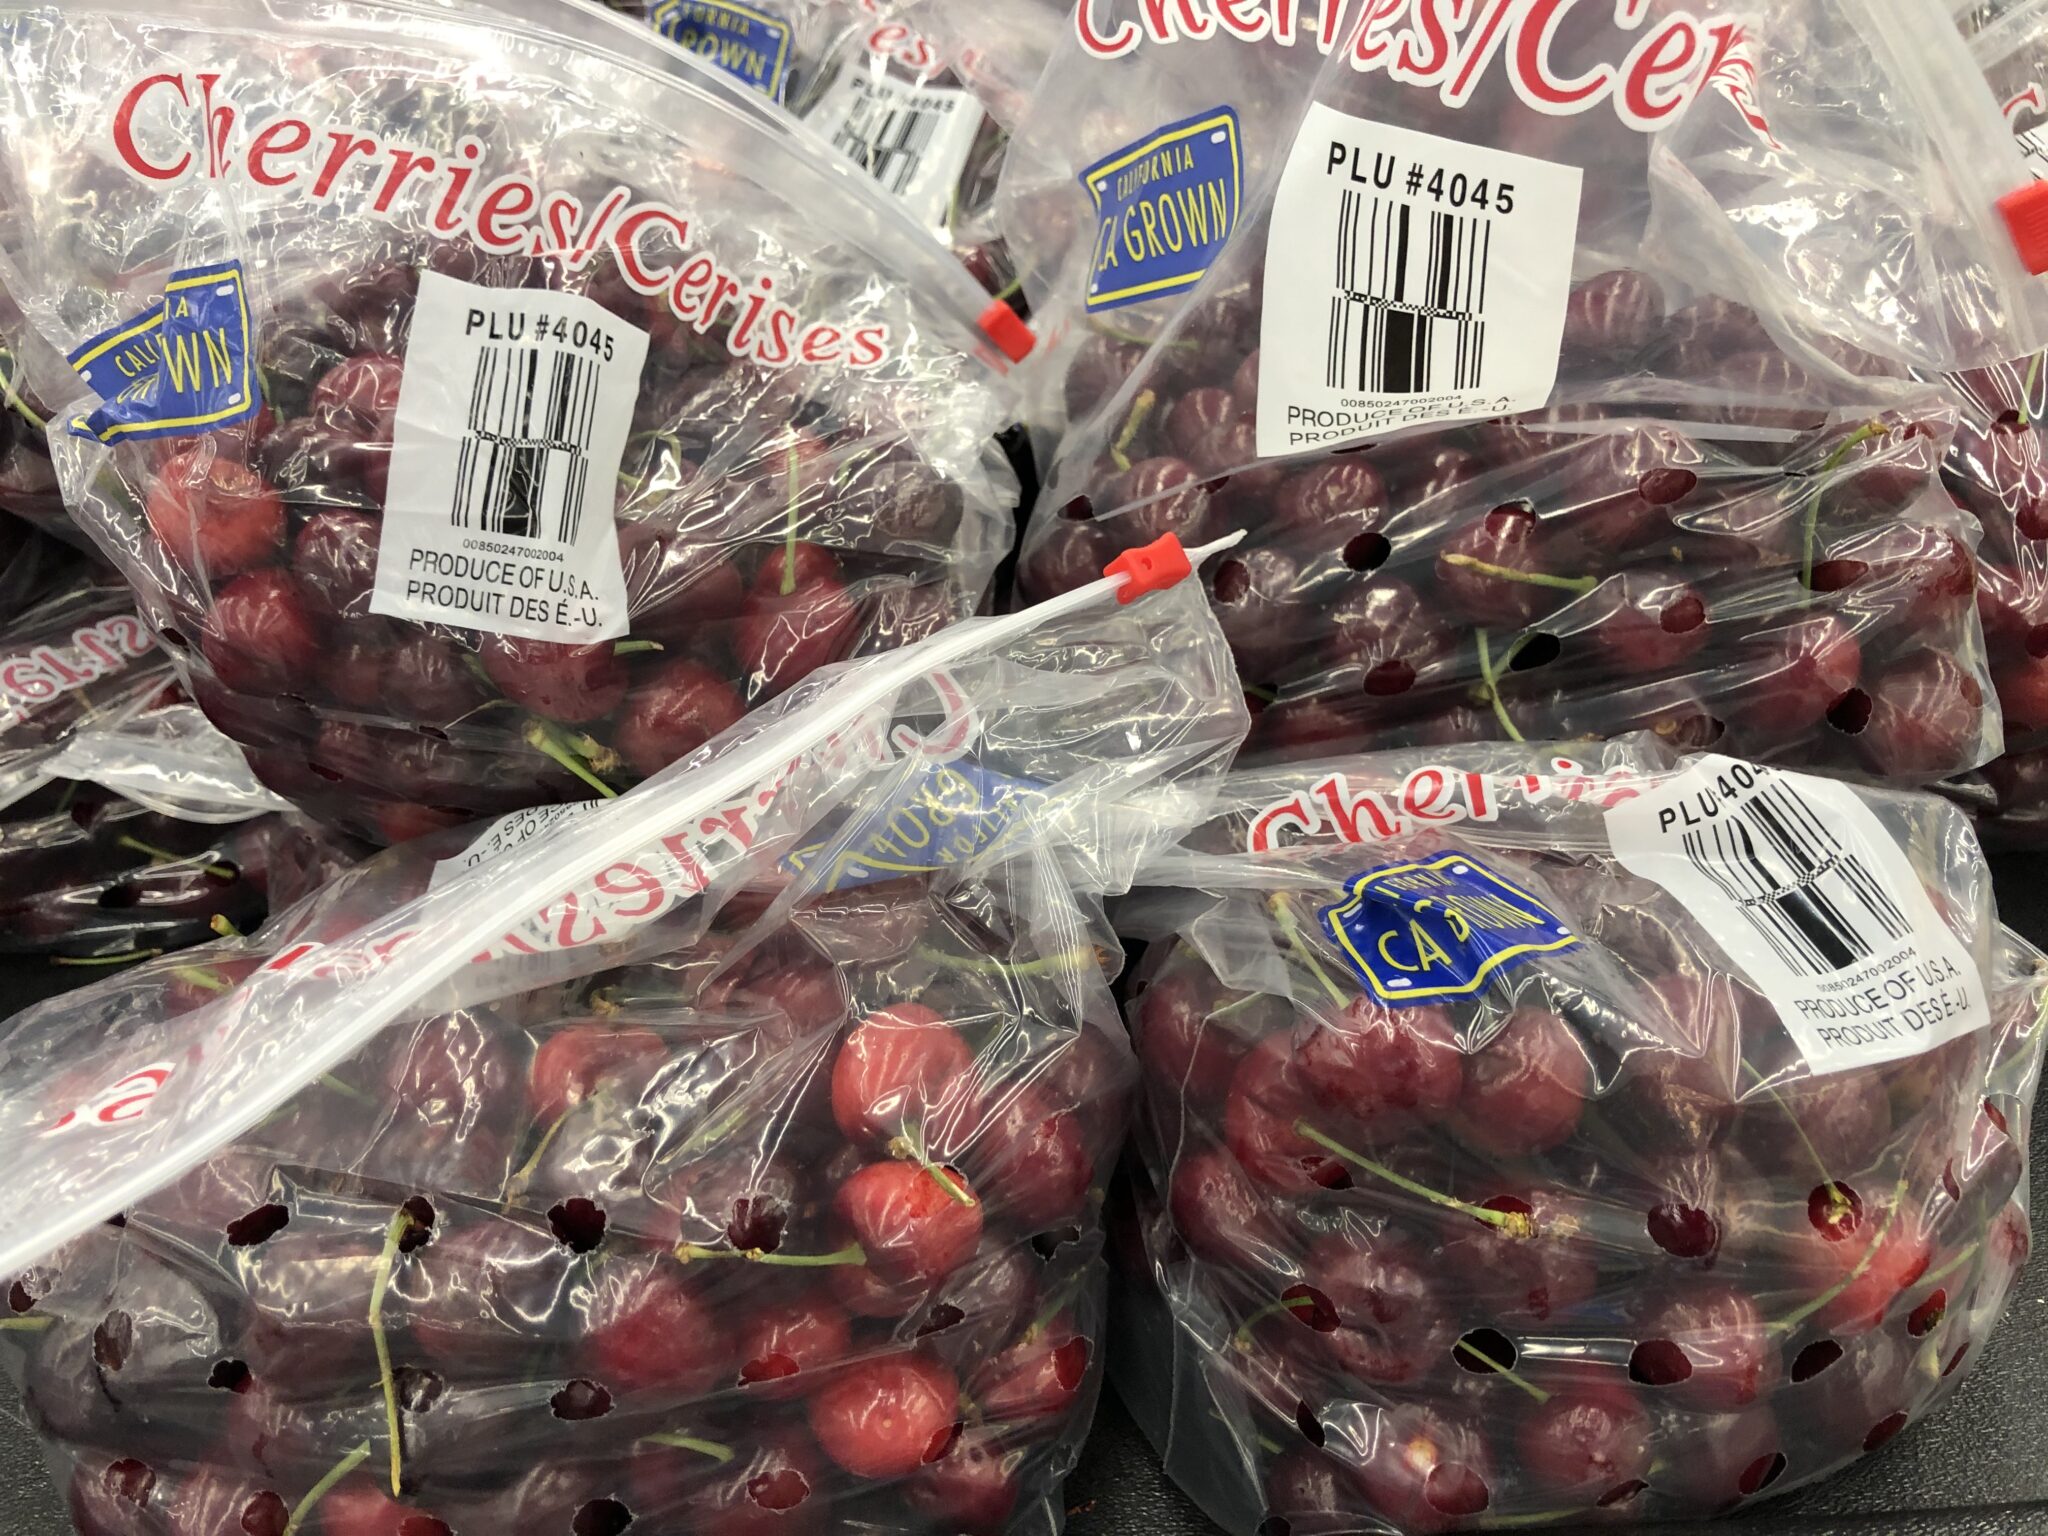 Giant: Fresh Sweet Cherries JUST $2.77 Lb Thru 6/8